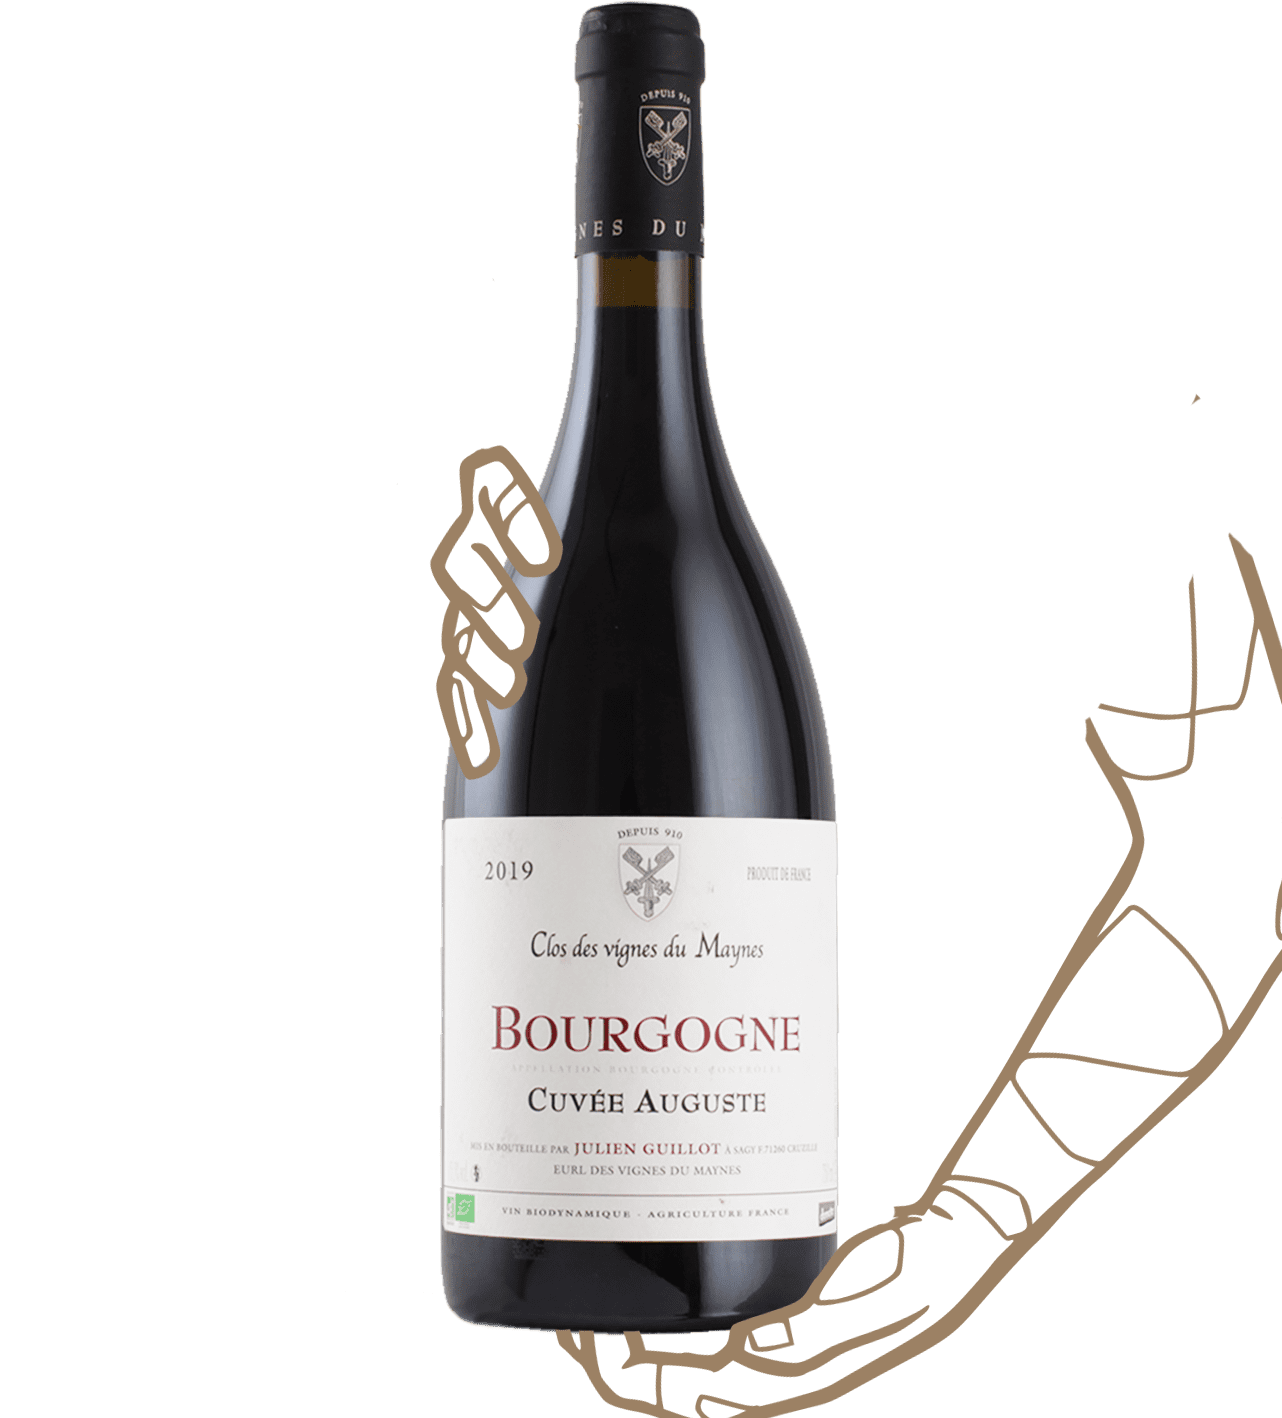 Auguste is a natural wine from bourgogne by domaine le clos des vignes du maynes